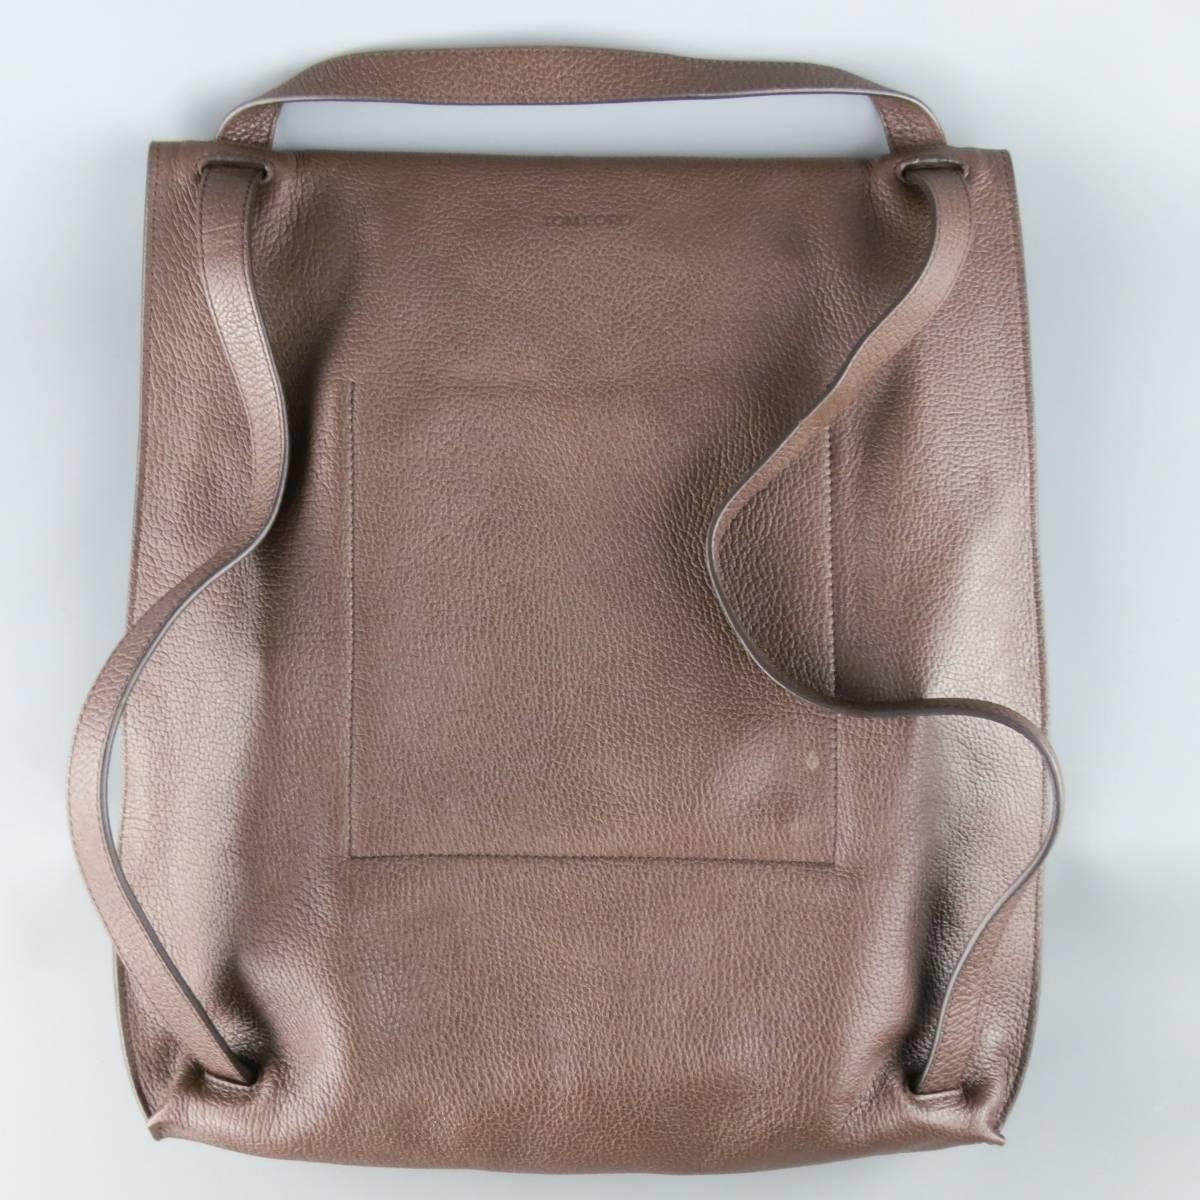 tom brown bag